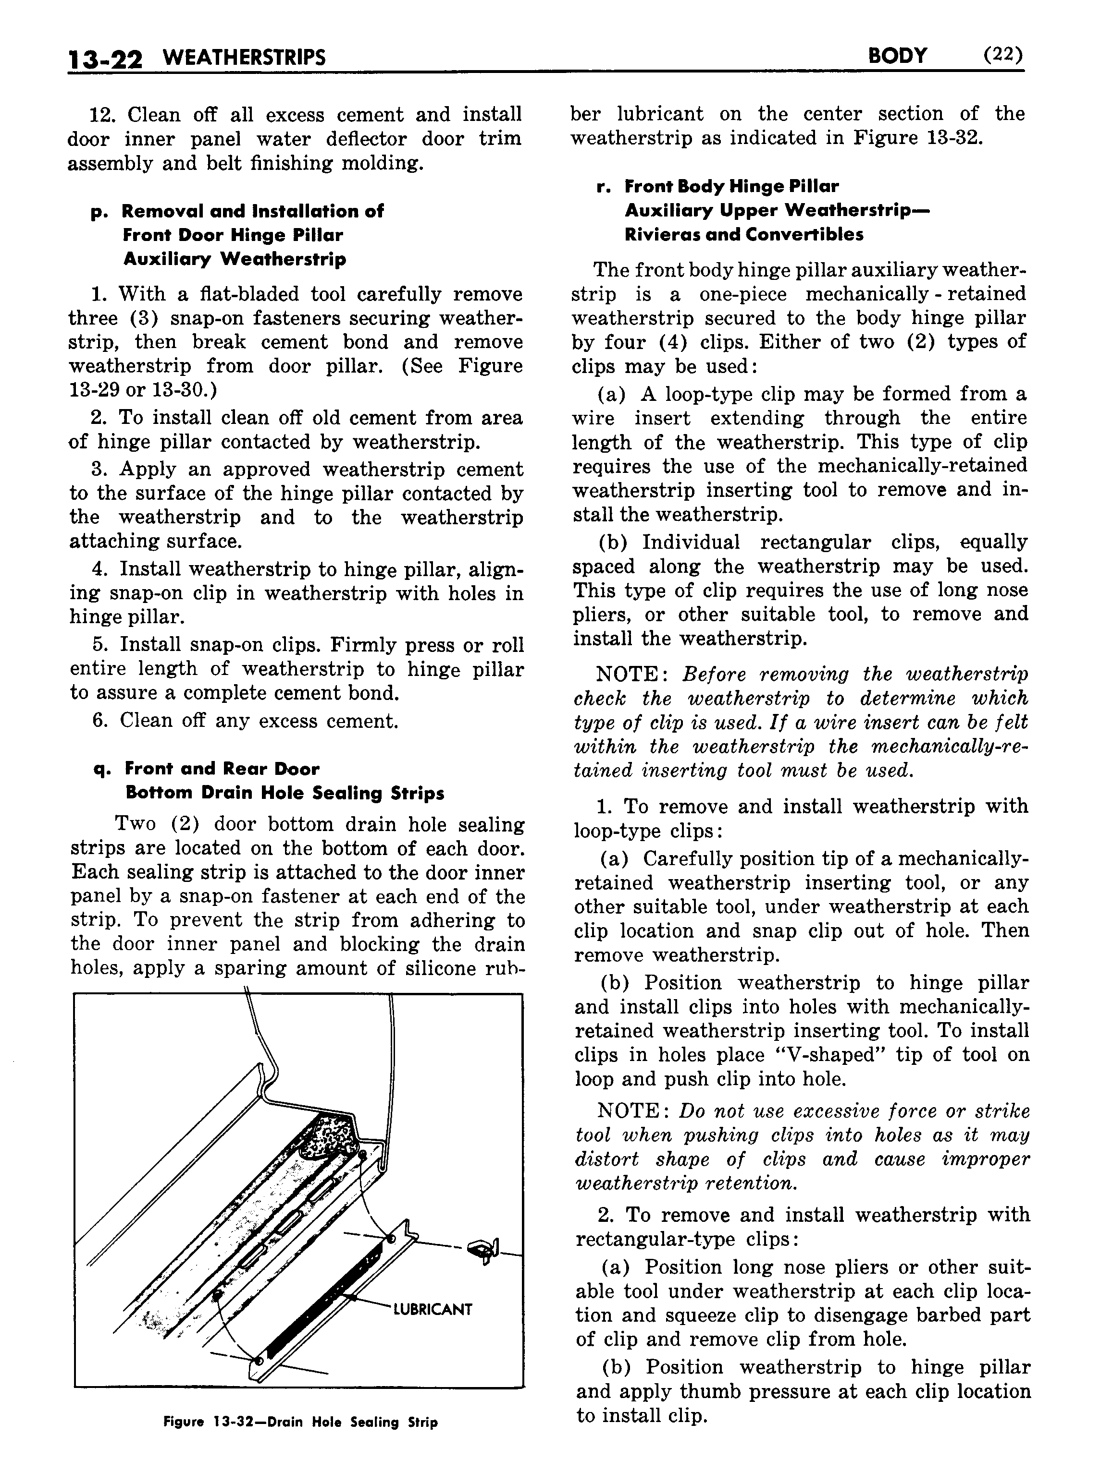 n_1957 Buick Body Service Manual-024-024.jpg